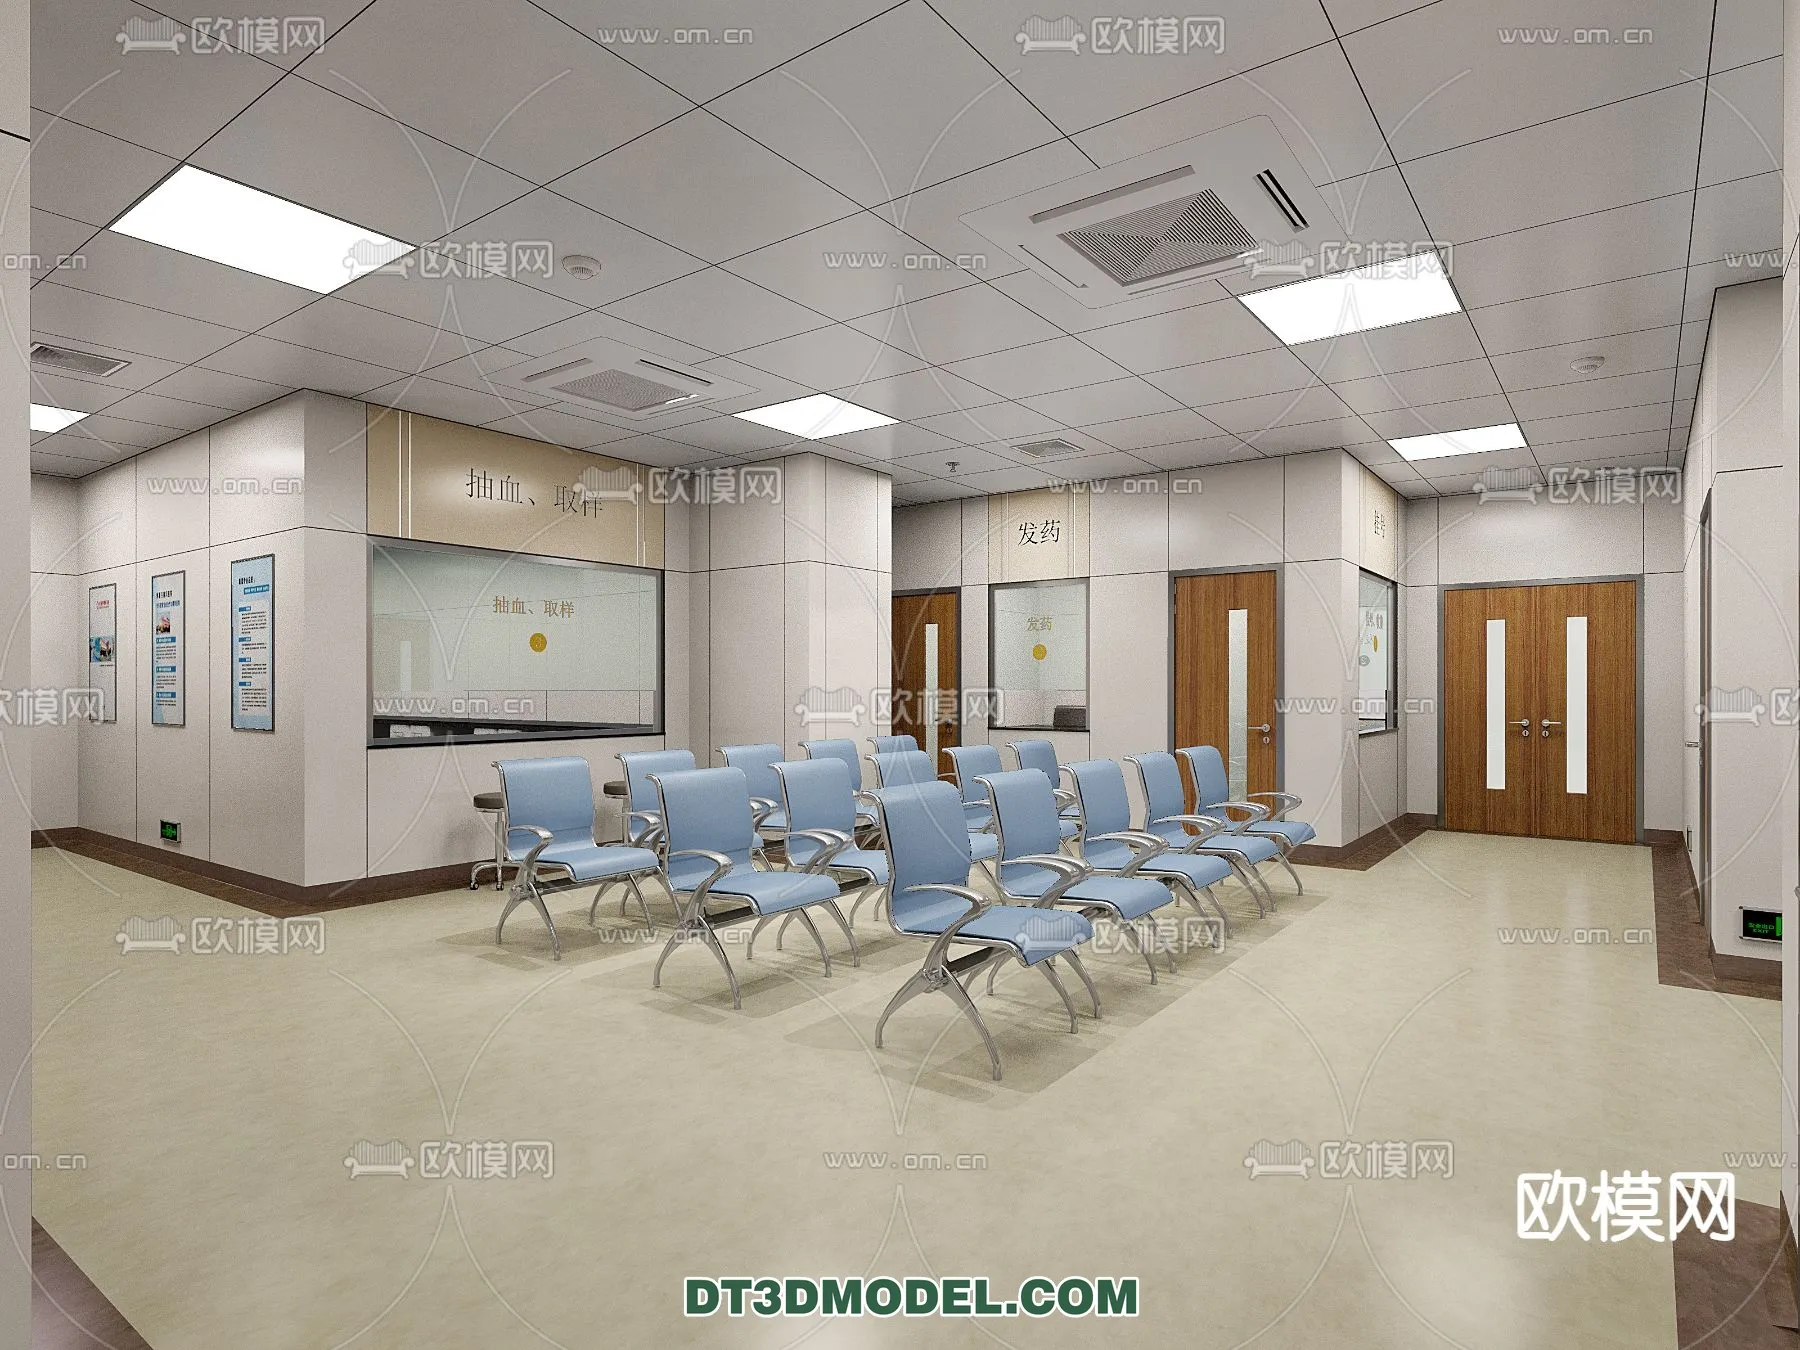 HOSPITAL 3D SCENES – MODERN – 0047